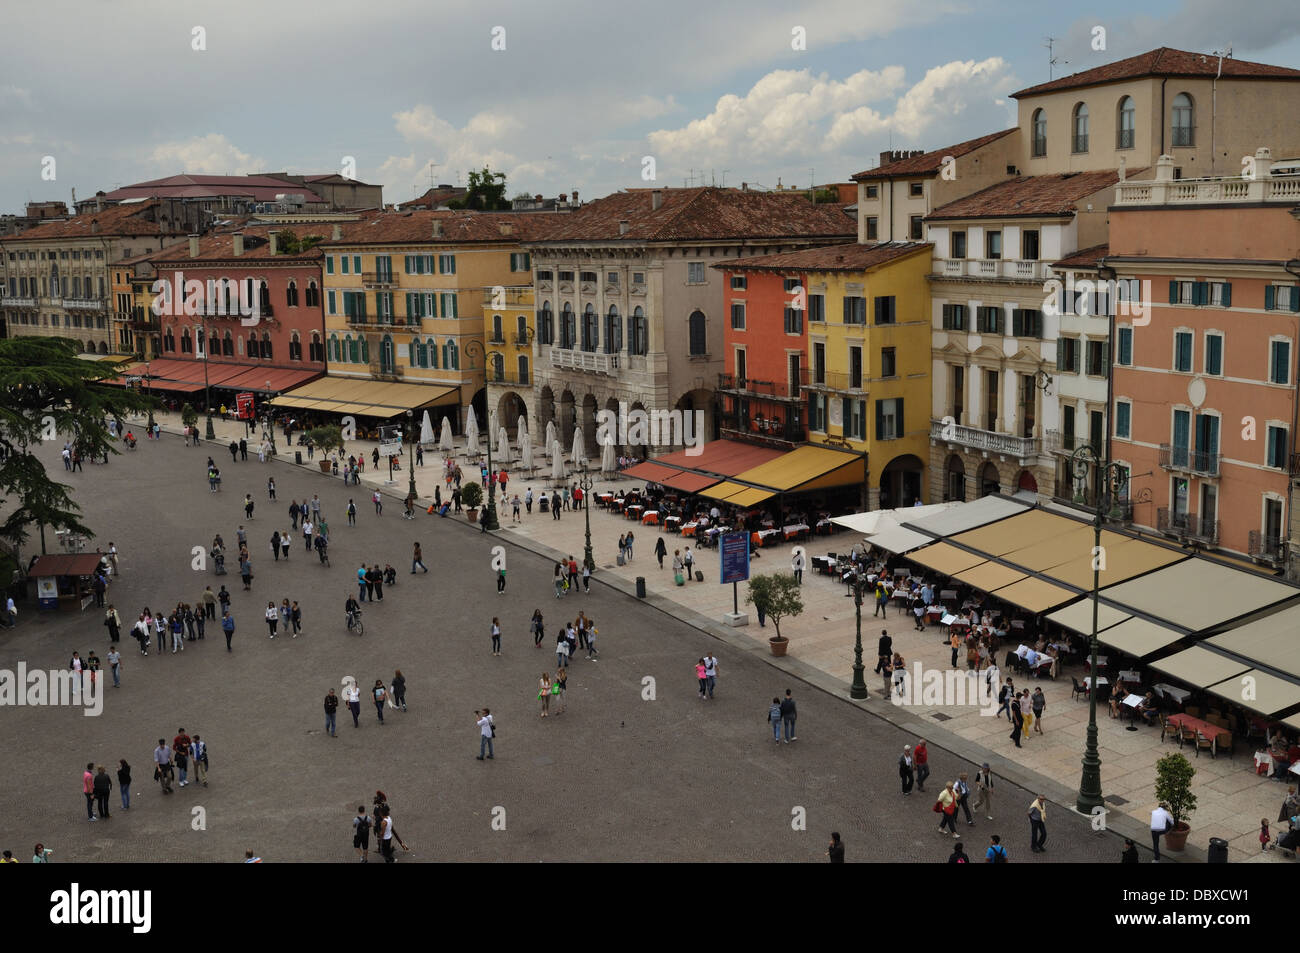 Piazza Bra, in the centre of Verona, Italy. Stock Photo